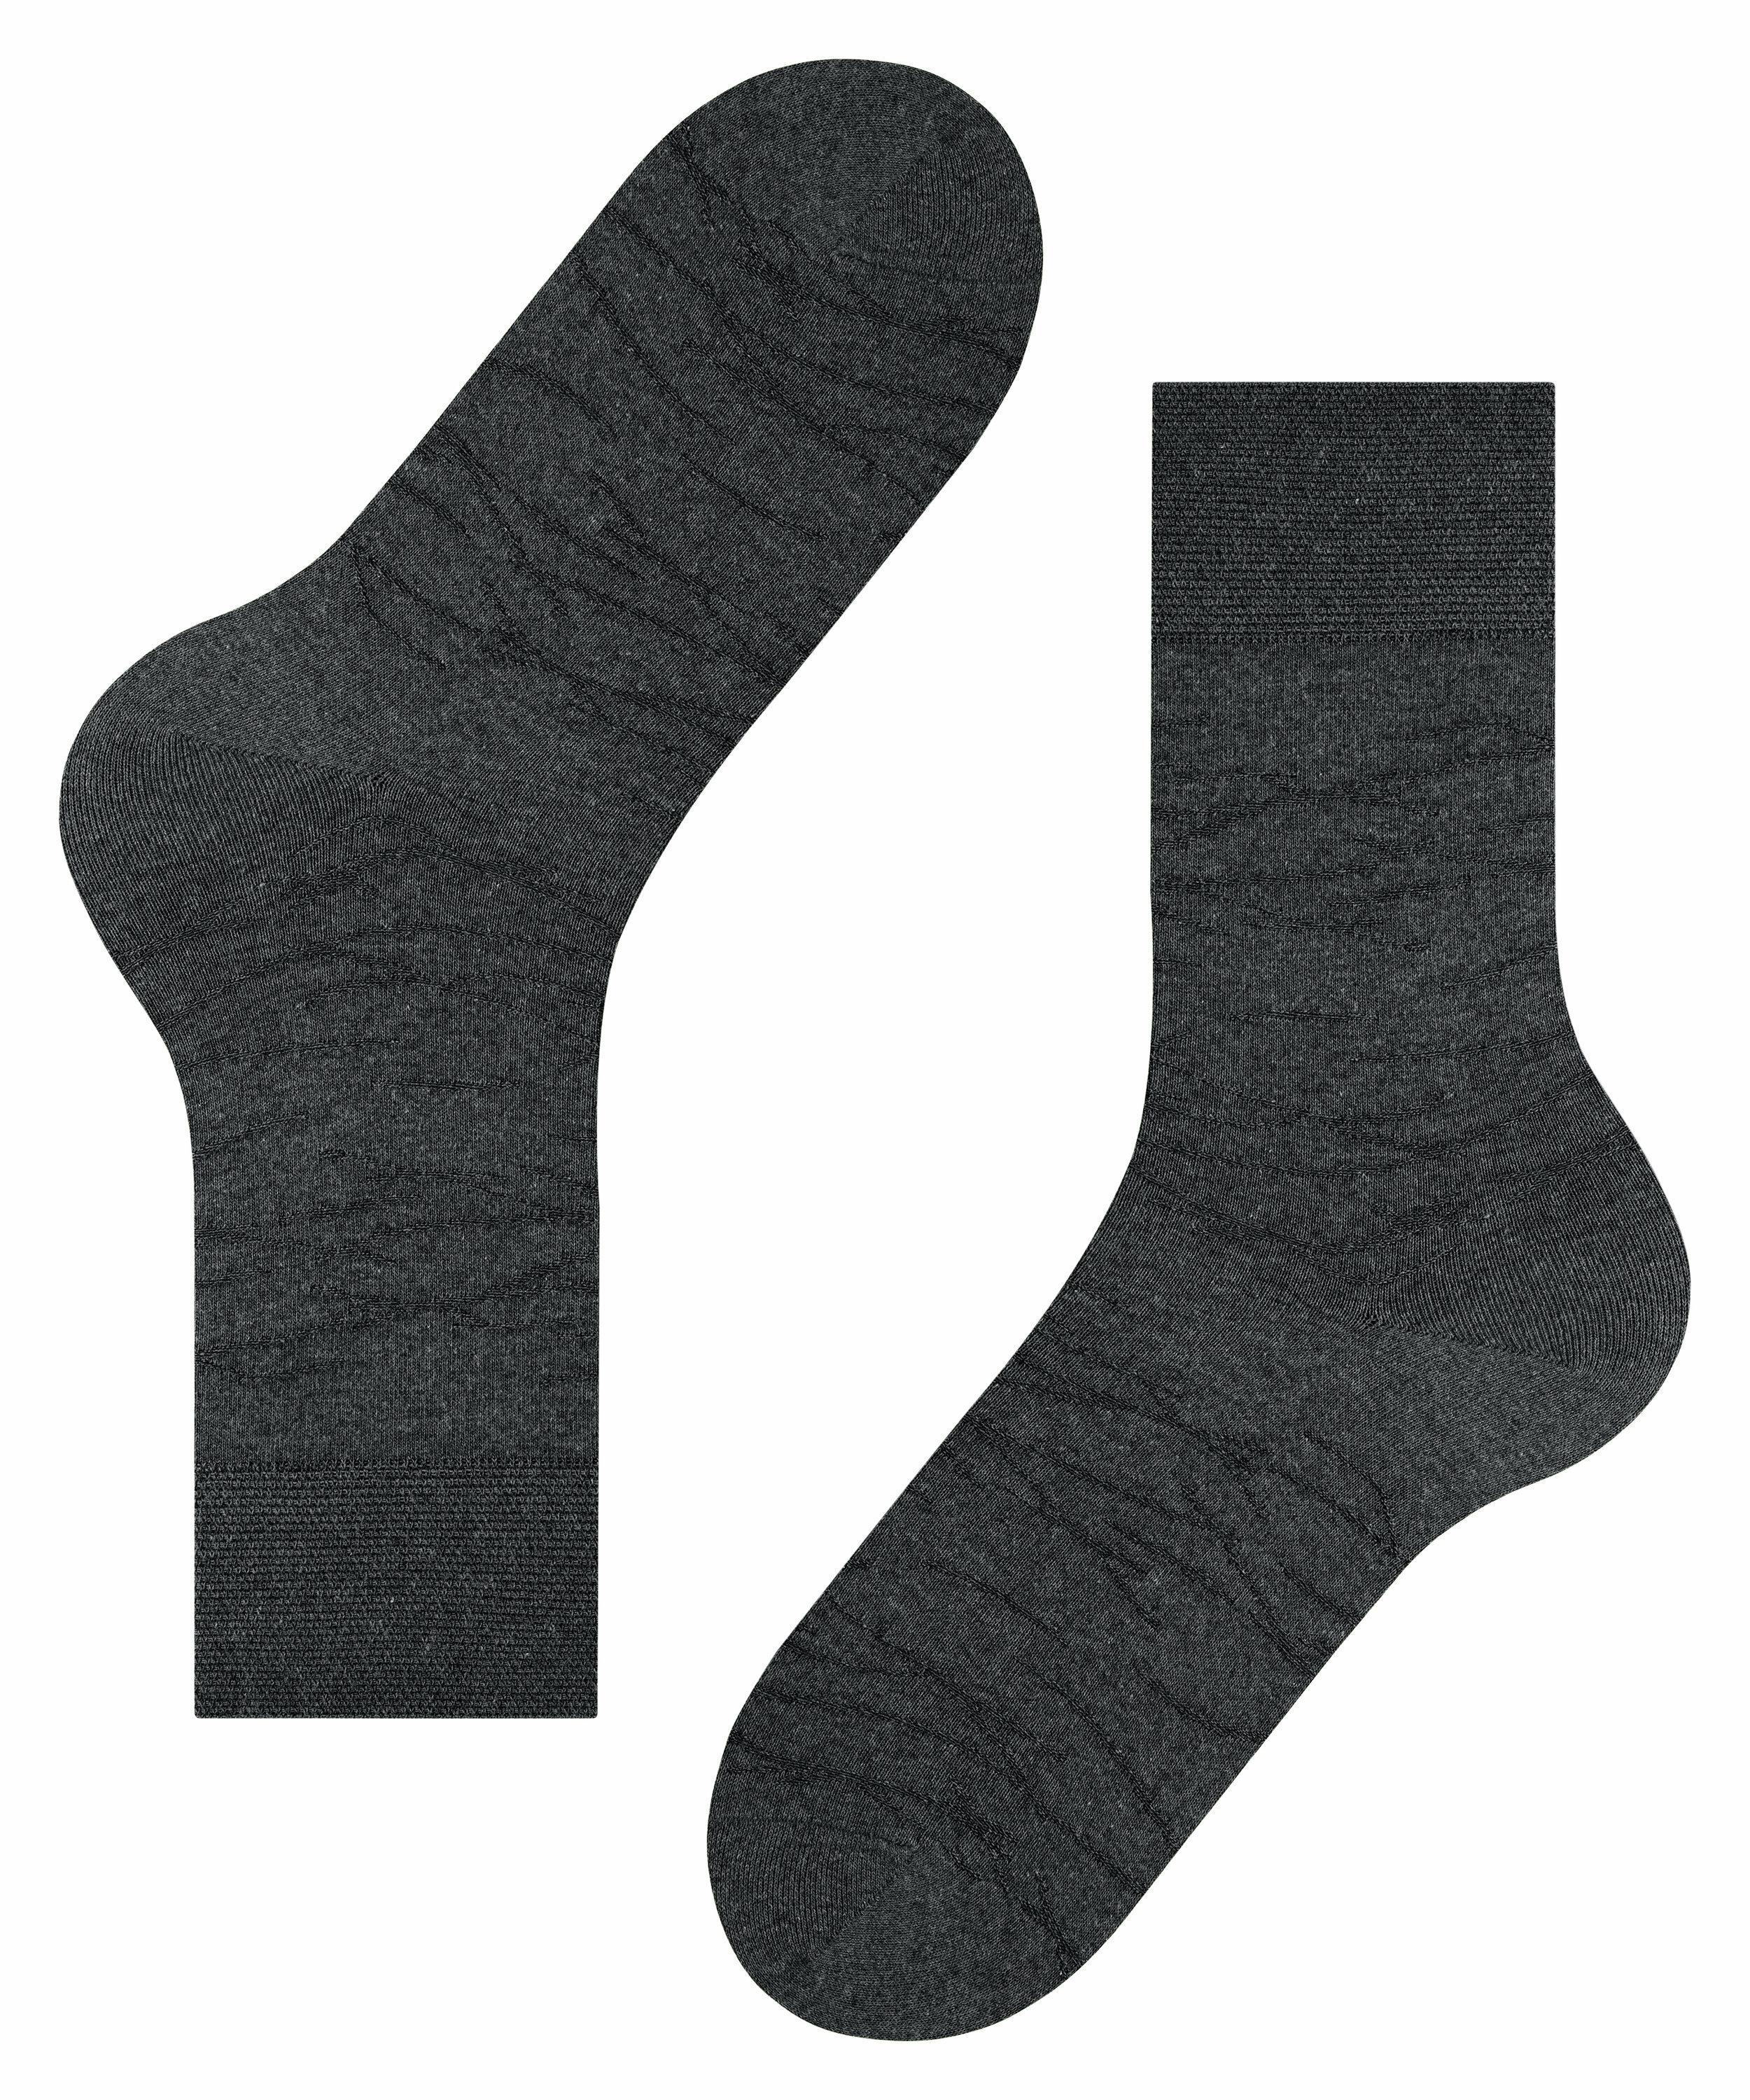 FALKE Sensitive Plant Soft Herren Socken, 39-42, Grau, Baumwolle, 12440-311 günstig online kaufen